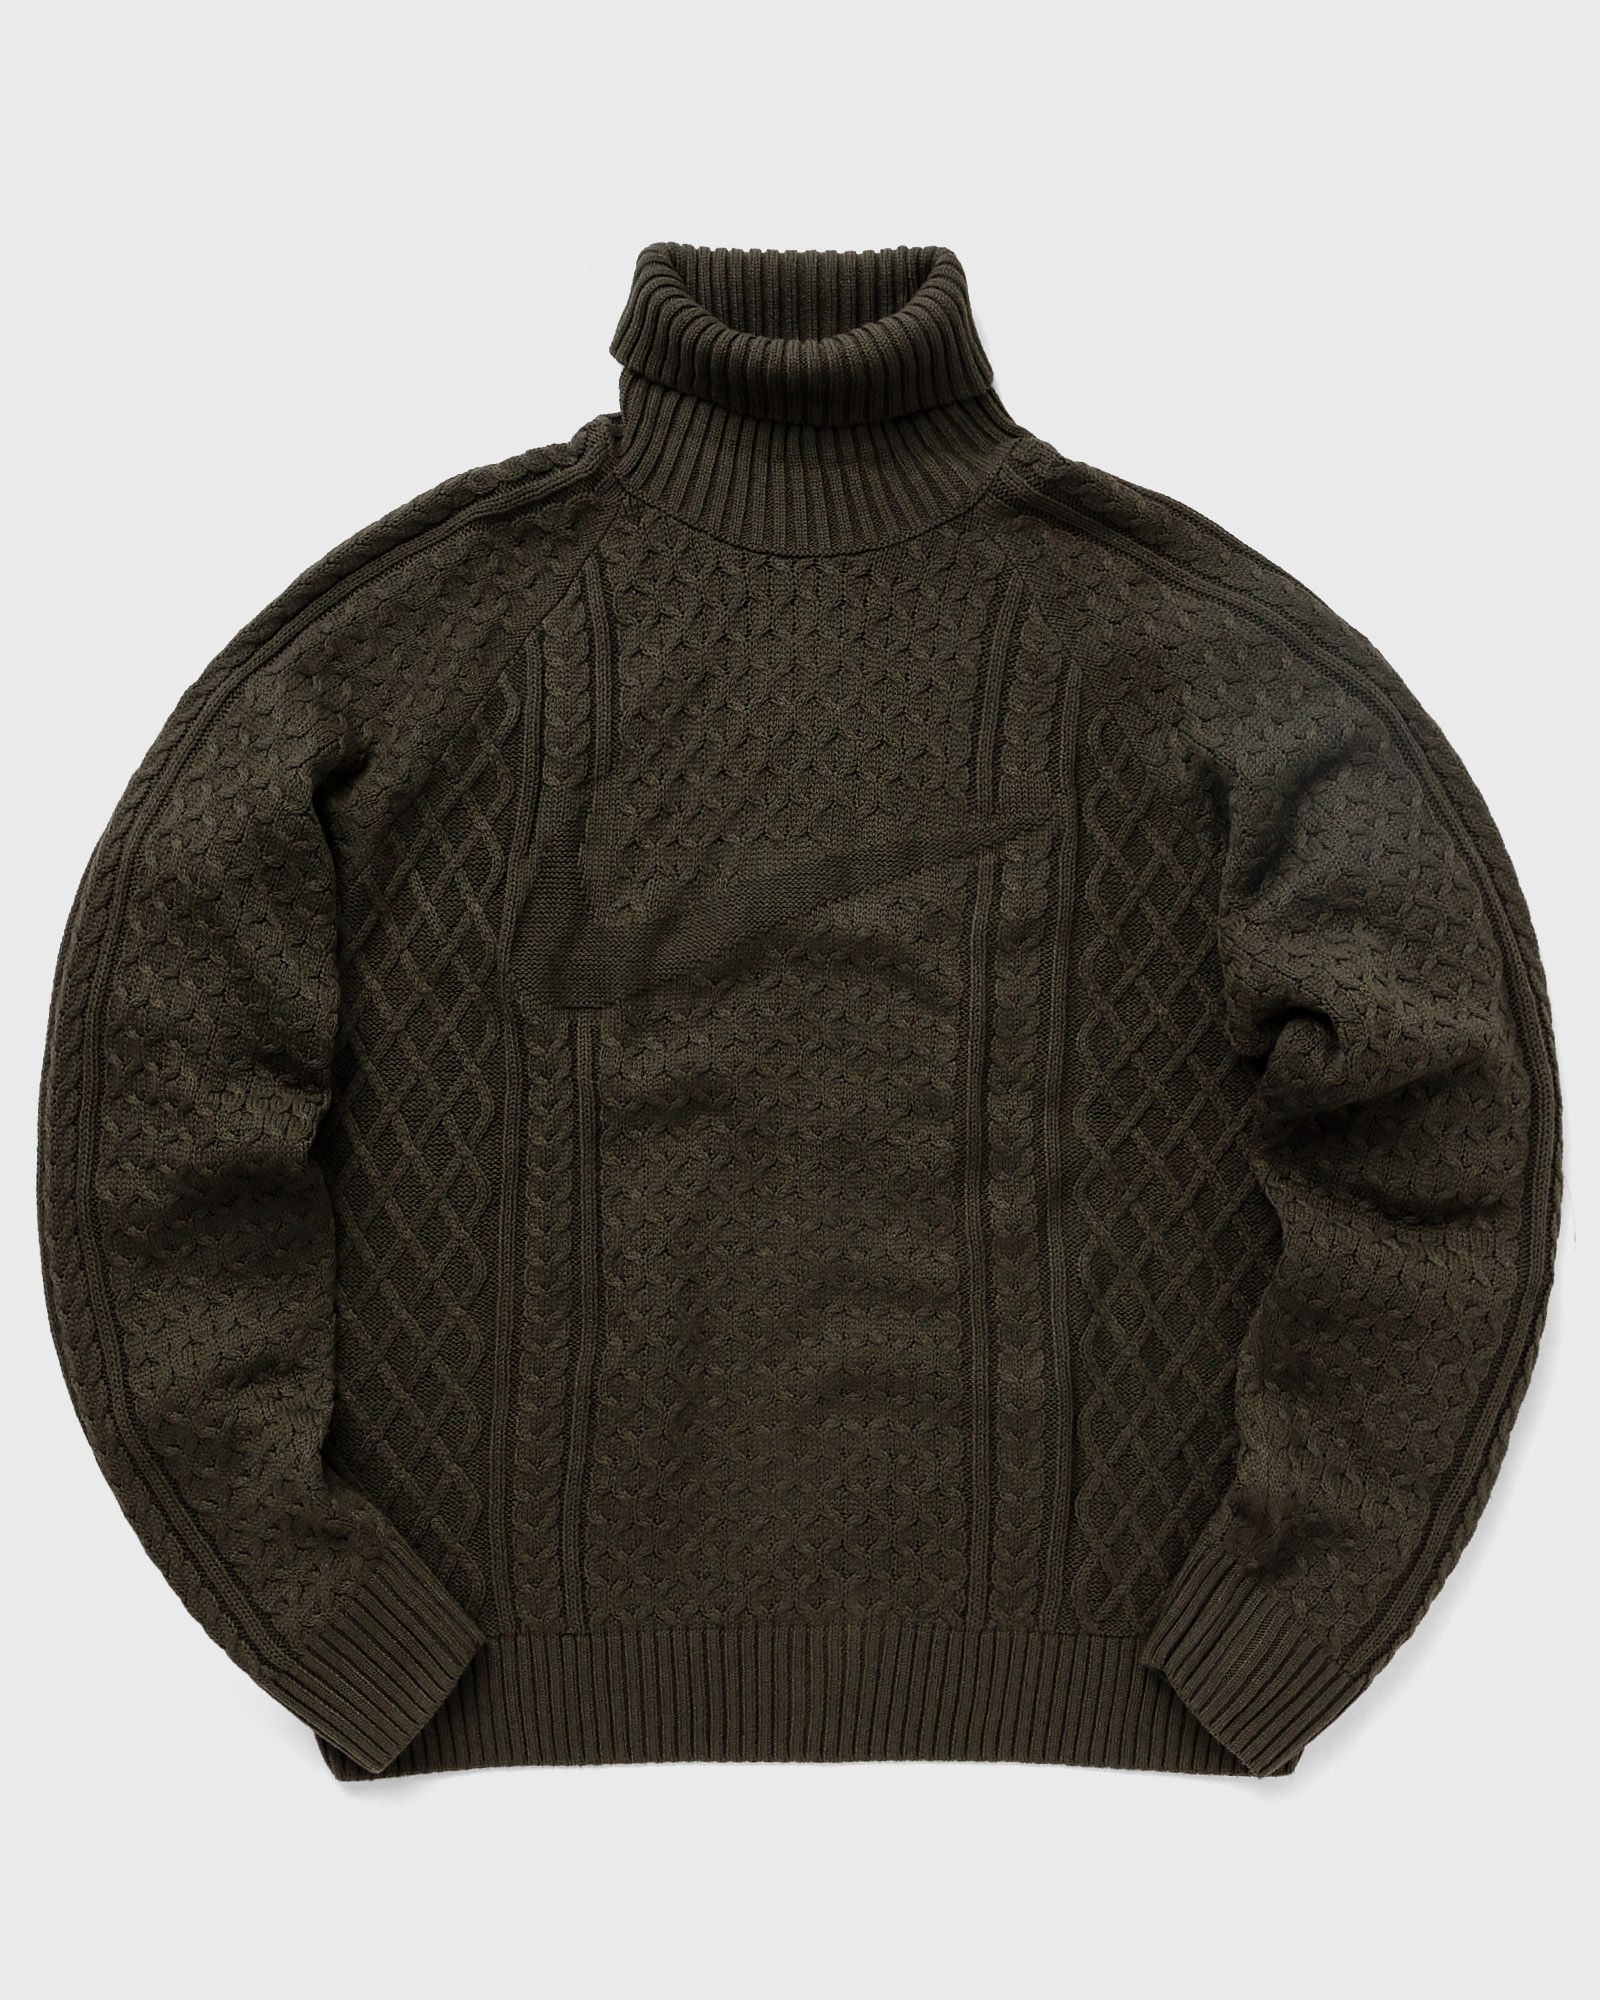 Nike - life men's cable knit turtleneck sweater men pullovers green in größe:xl